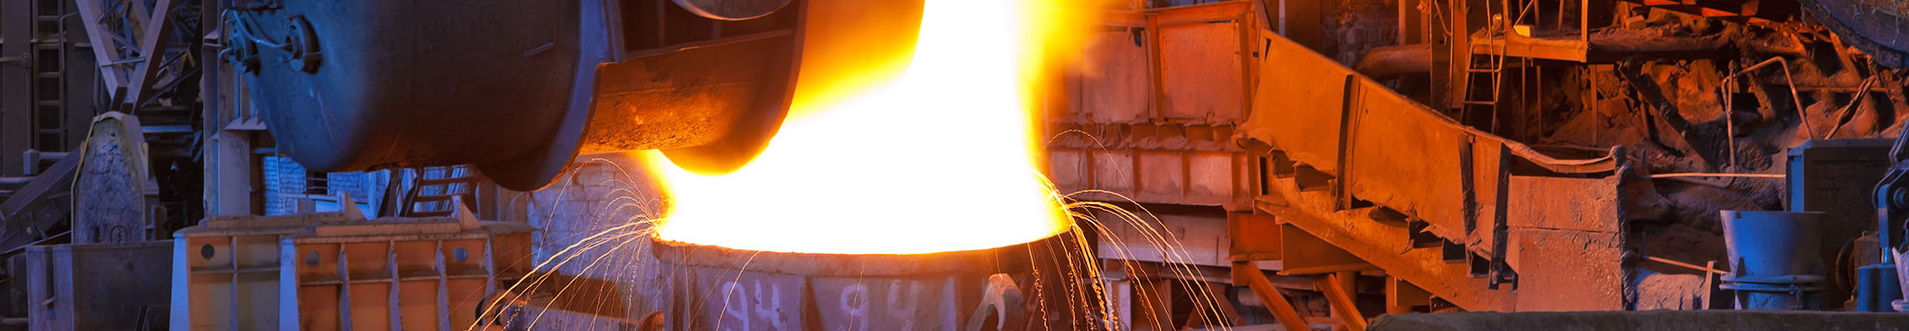 ladle furnace iron & steel